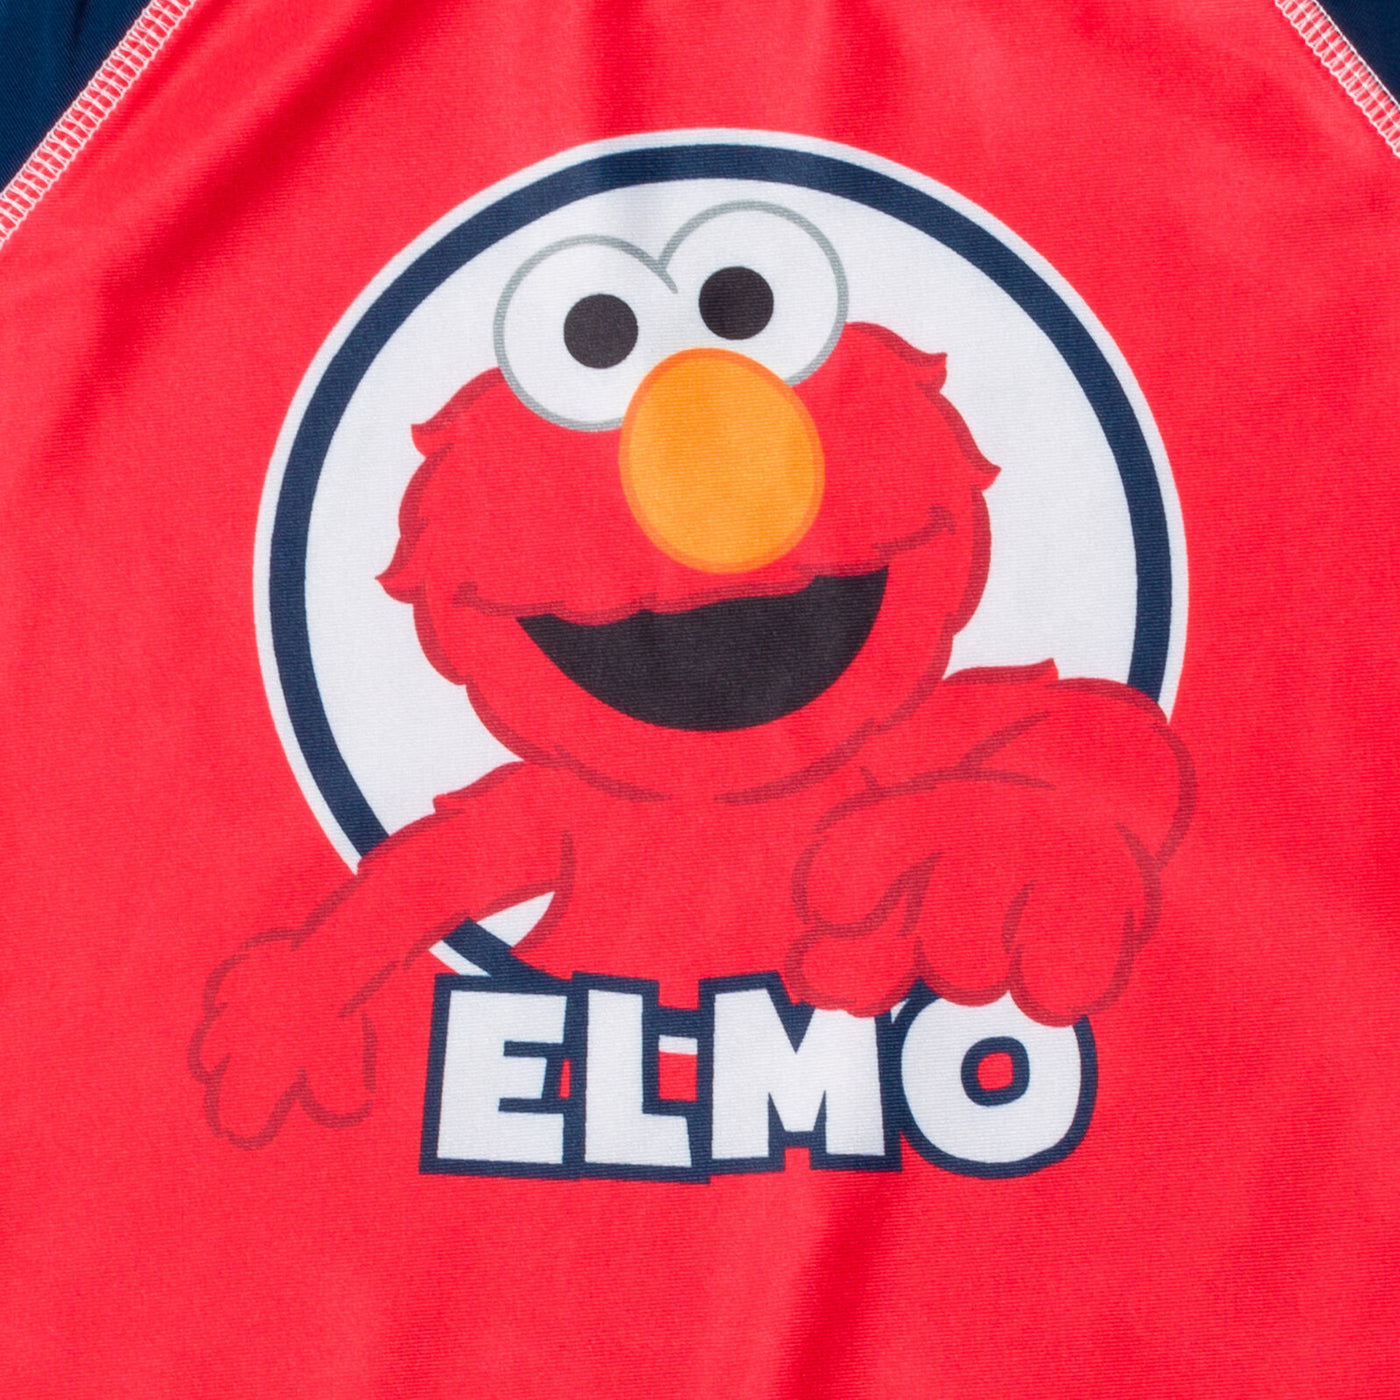 Sesame Street Elmo UPF 50+ Rash Guard Swim Trunks Outfit Set